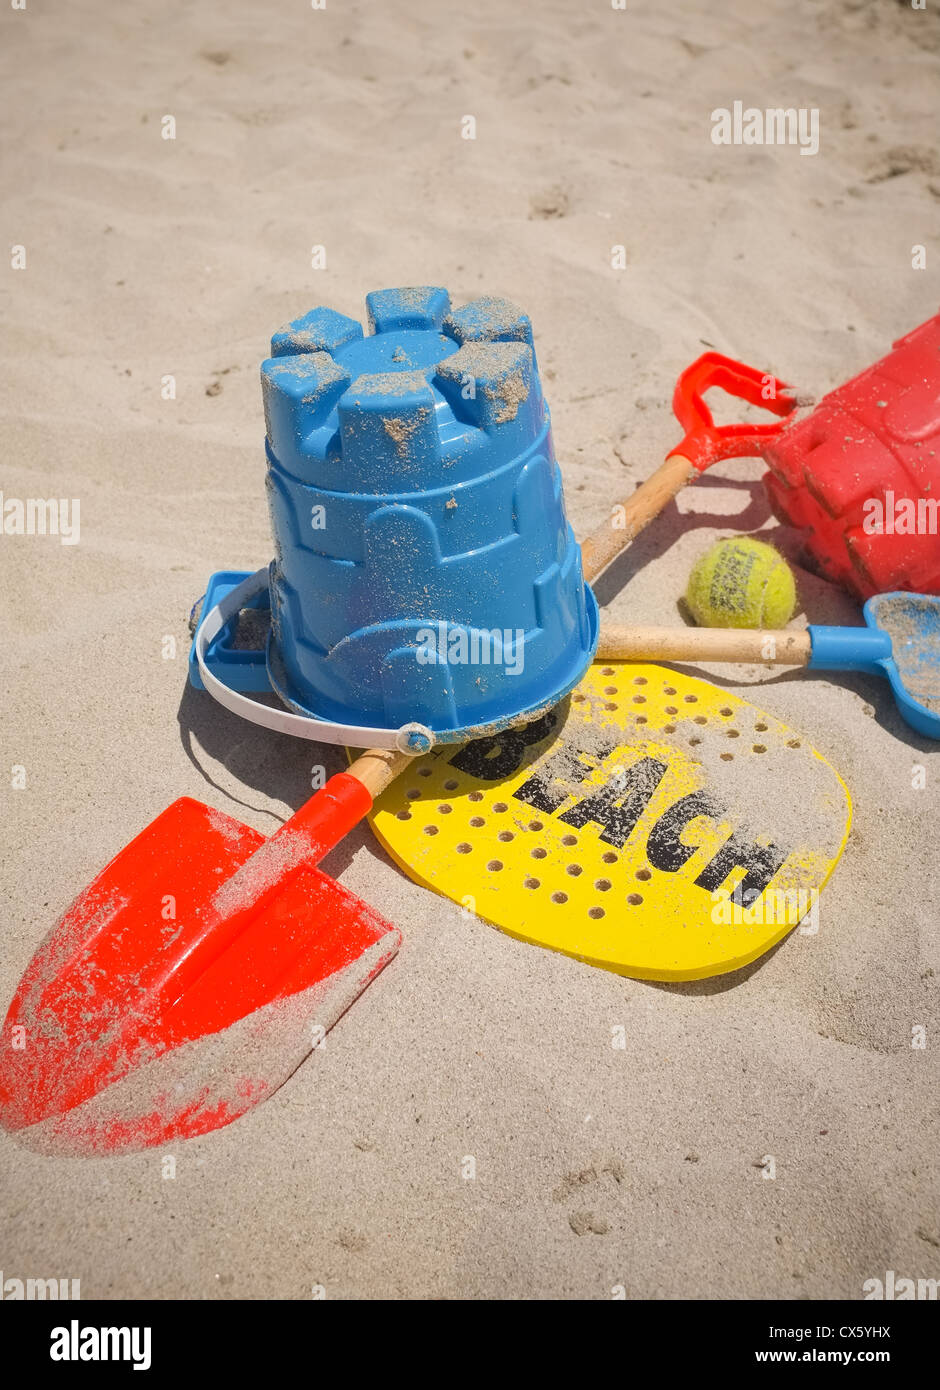 beach fun equipment for playing on the beach Stock Photo